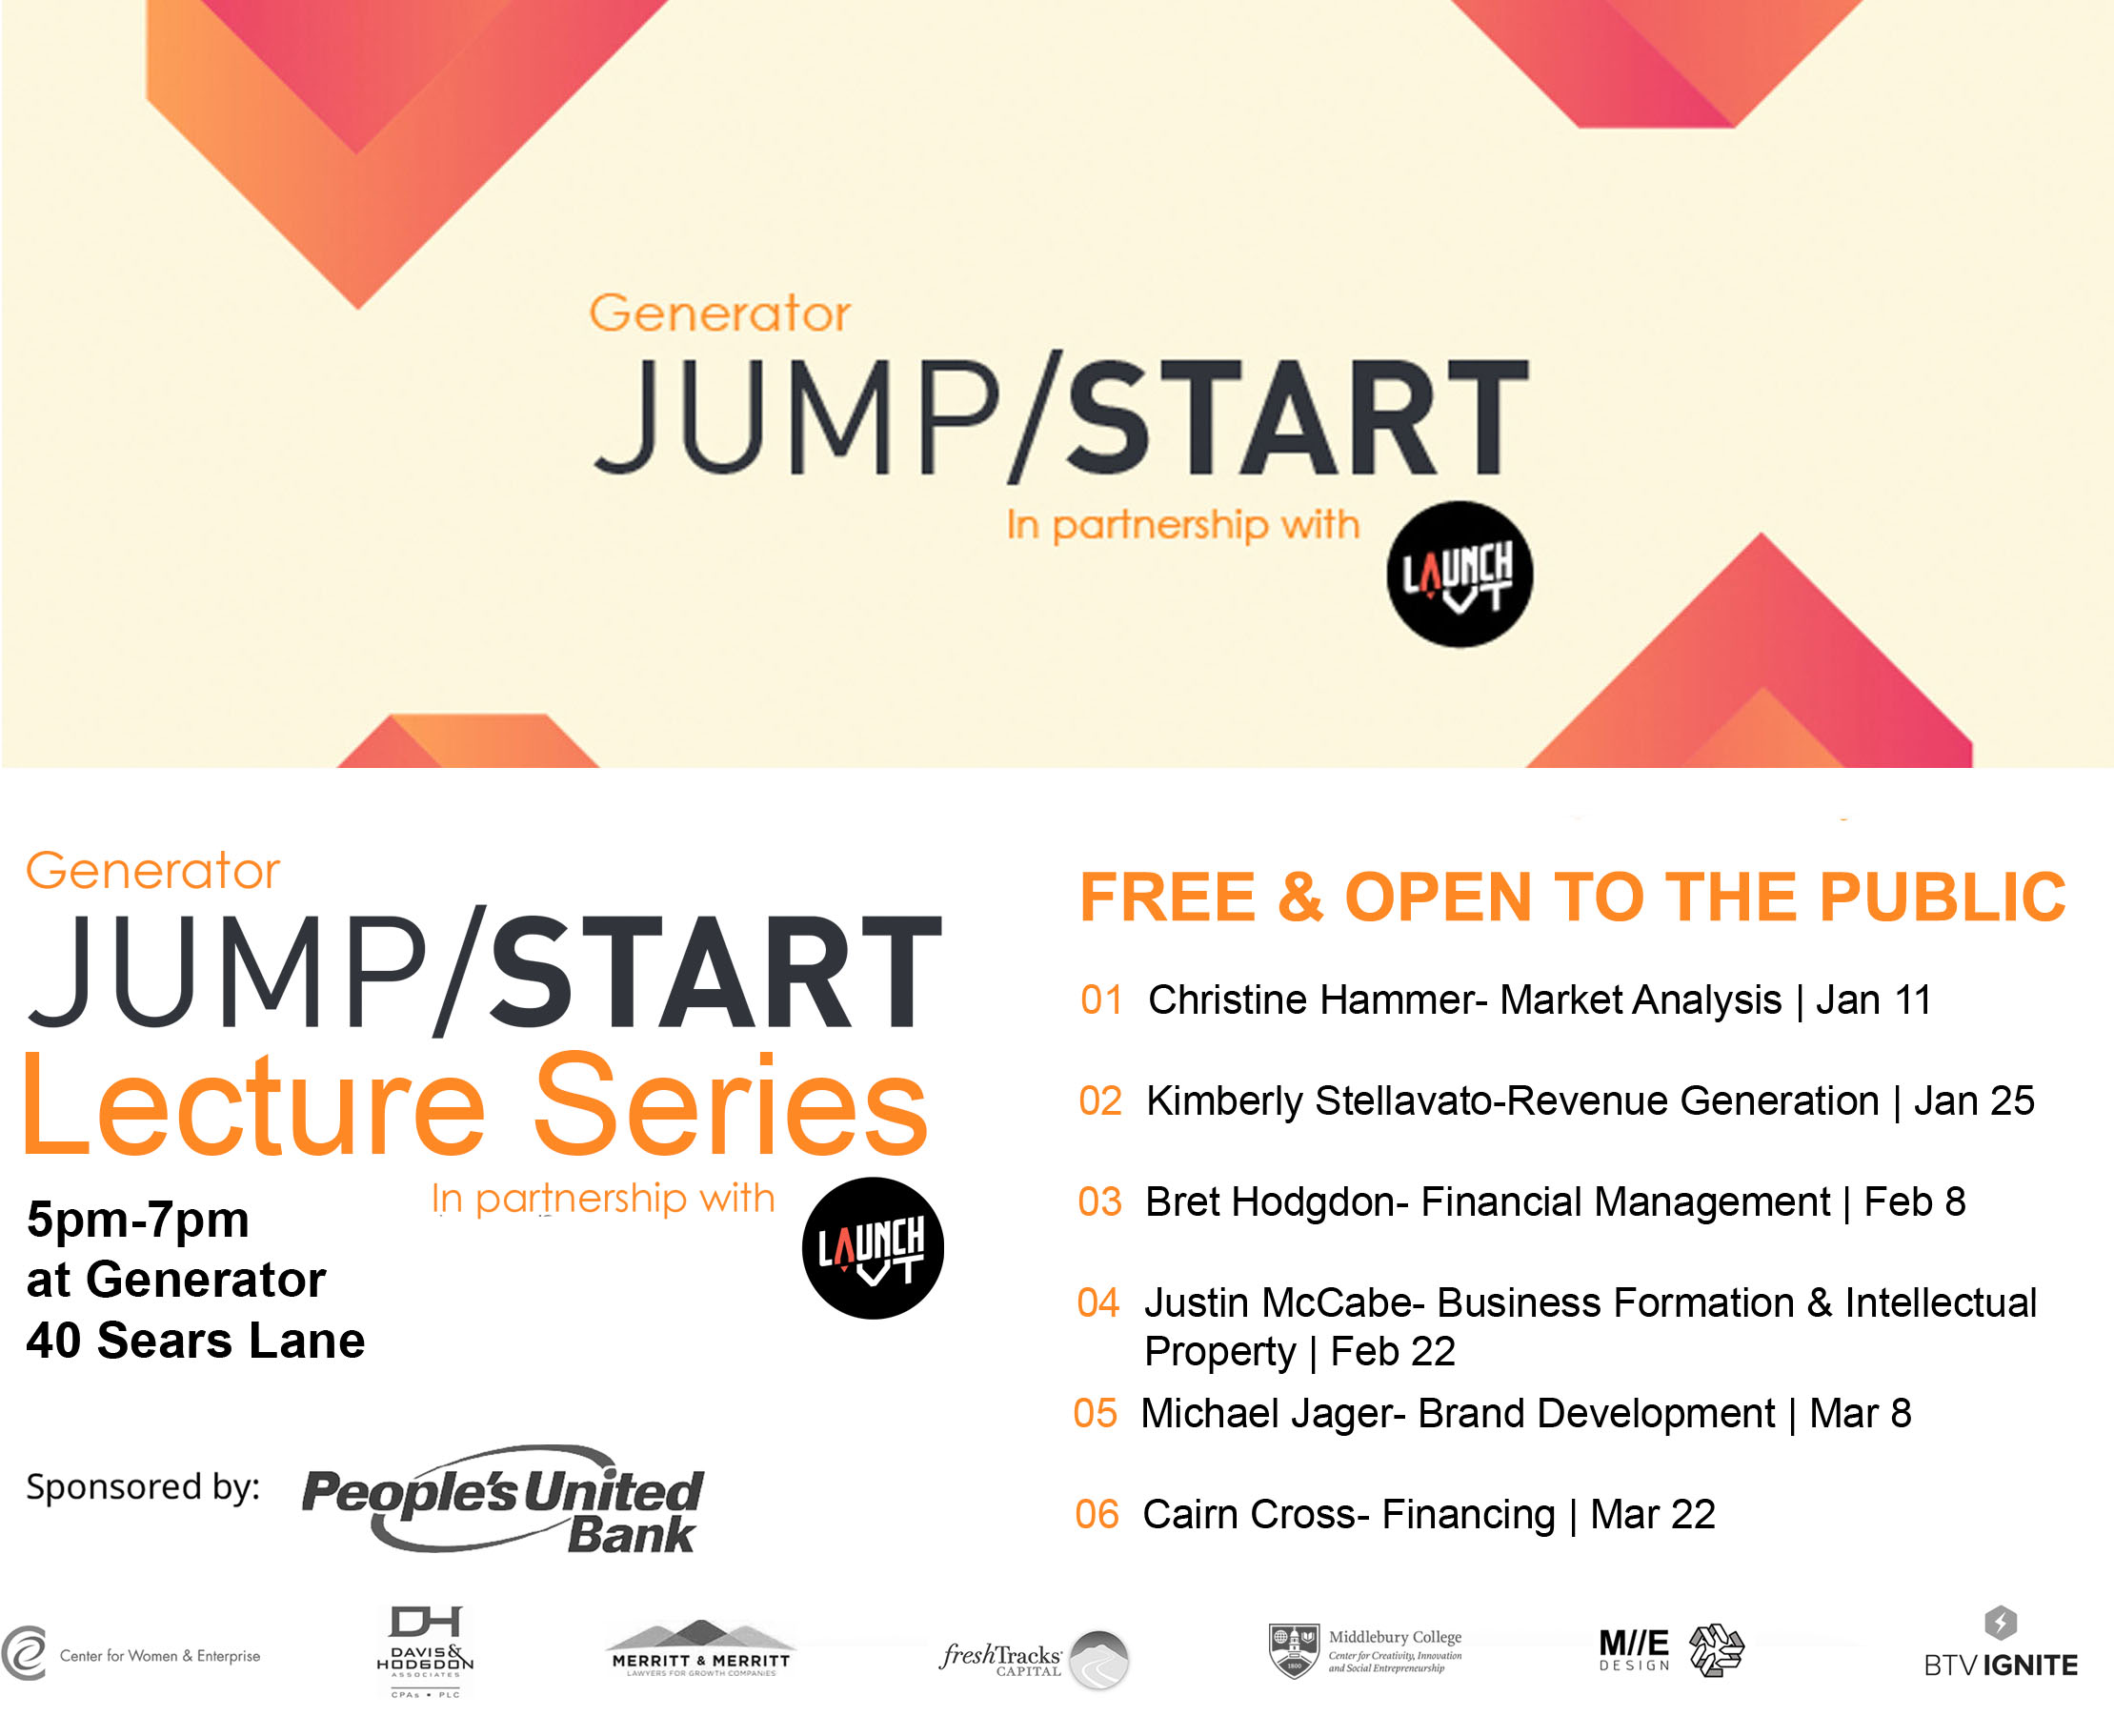 Jump/Start Lecture Series Starts on Jan 11